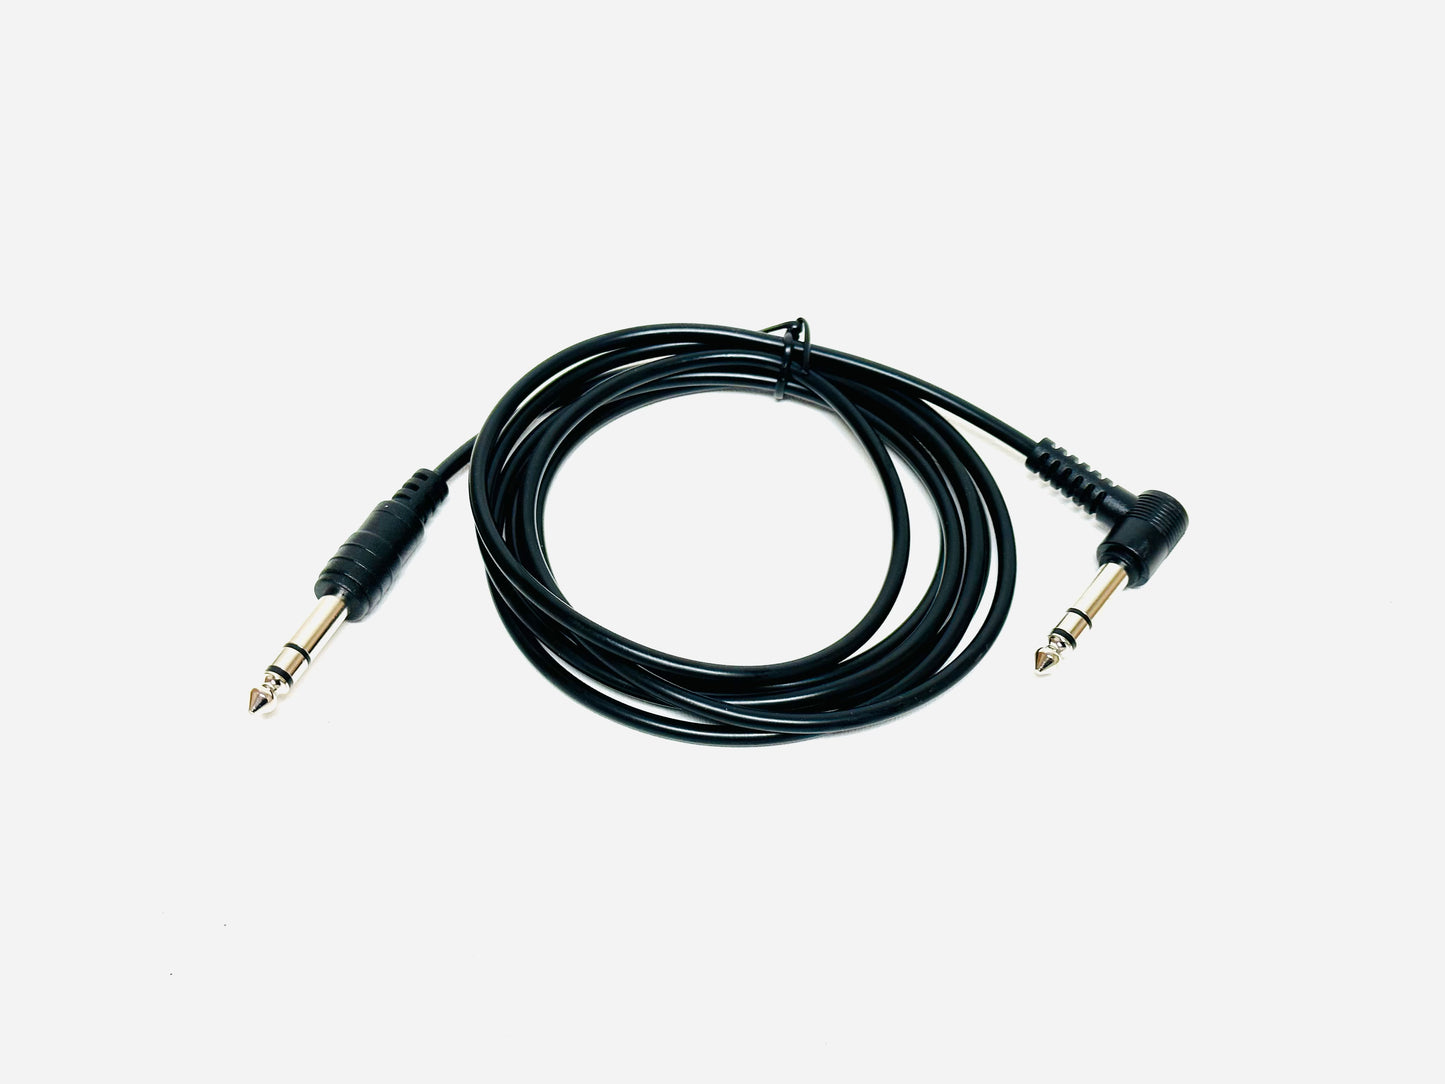 Alesis Strike Pro 12” Mesh Tom Drum pad mount an cable